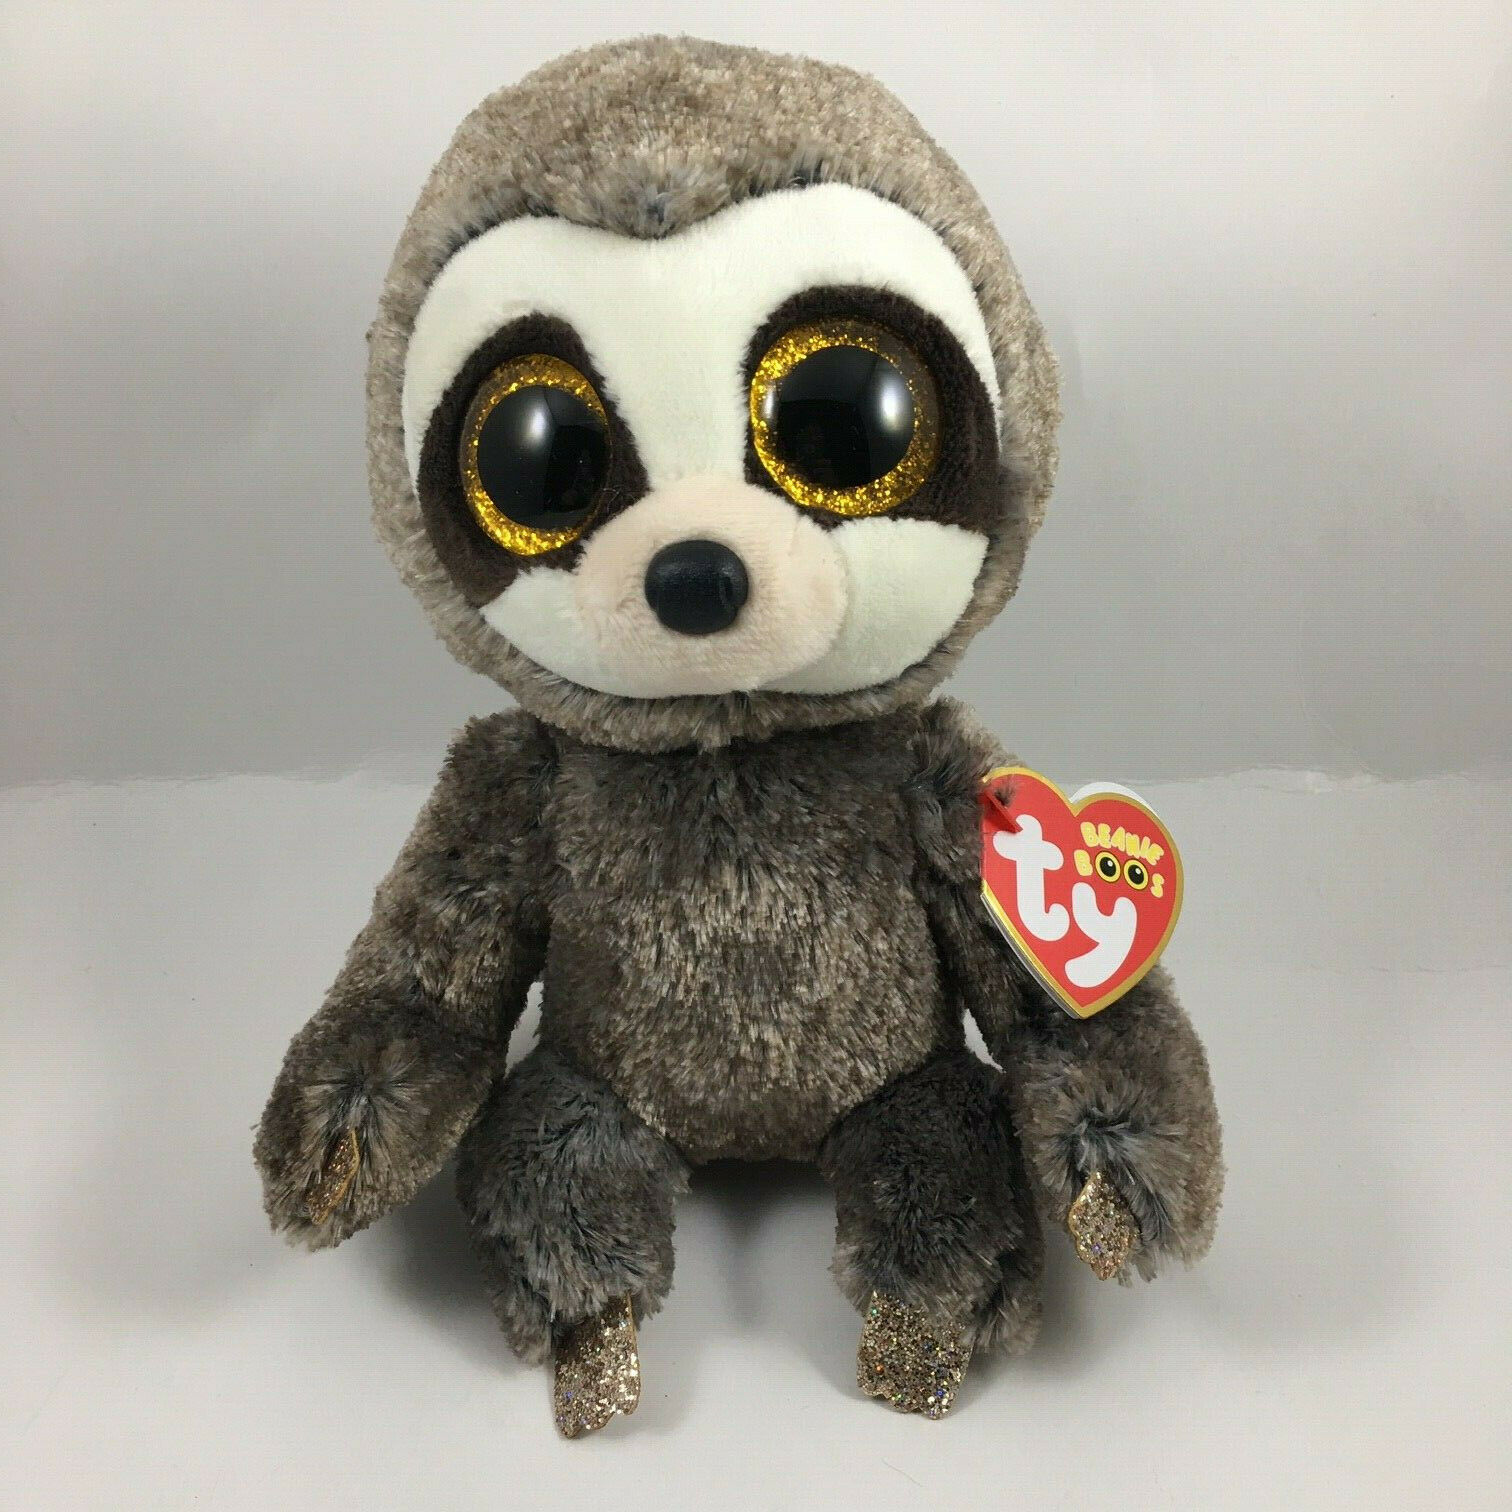 Ty Beanie Boos 6" Dangler The Sloth Plush Stuffed Animal Toy Mwmts Ty Heart Tags